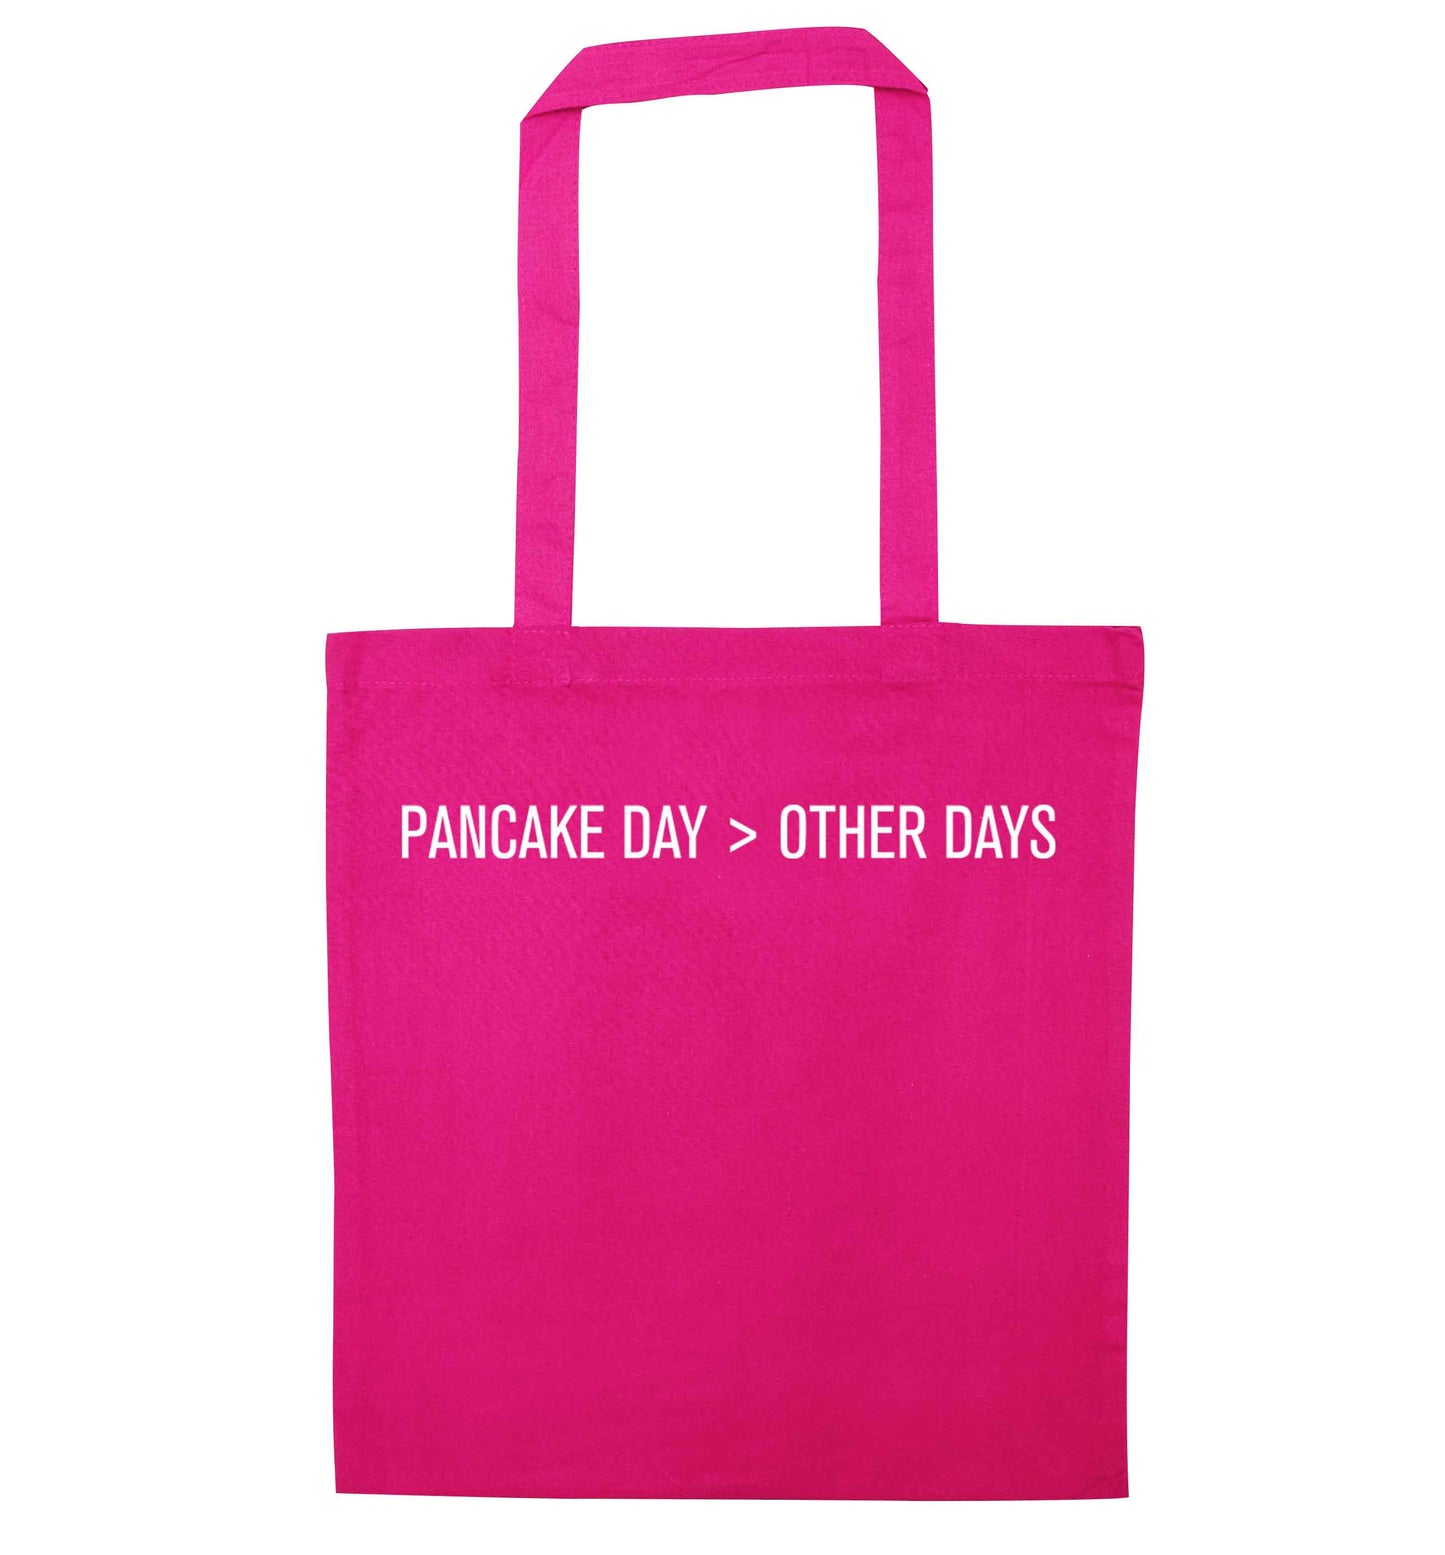 Pancake day > other days pink tote bag